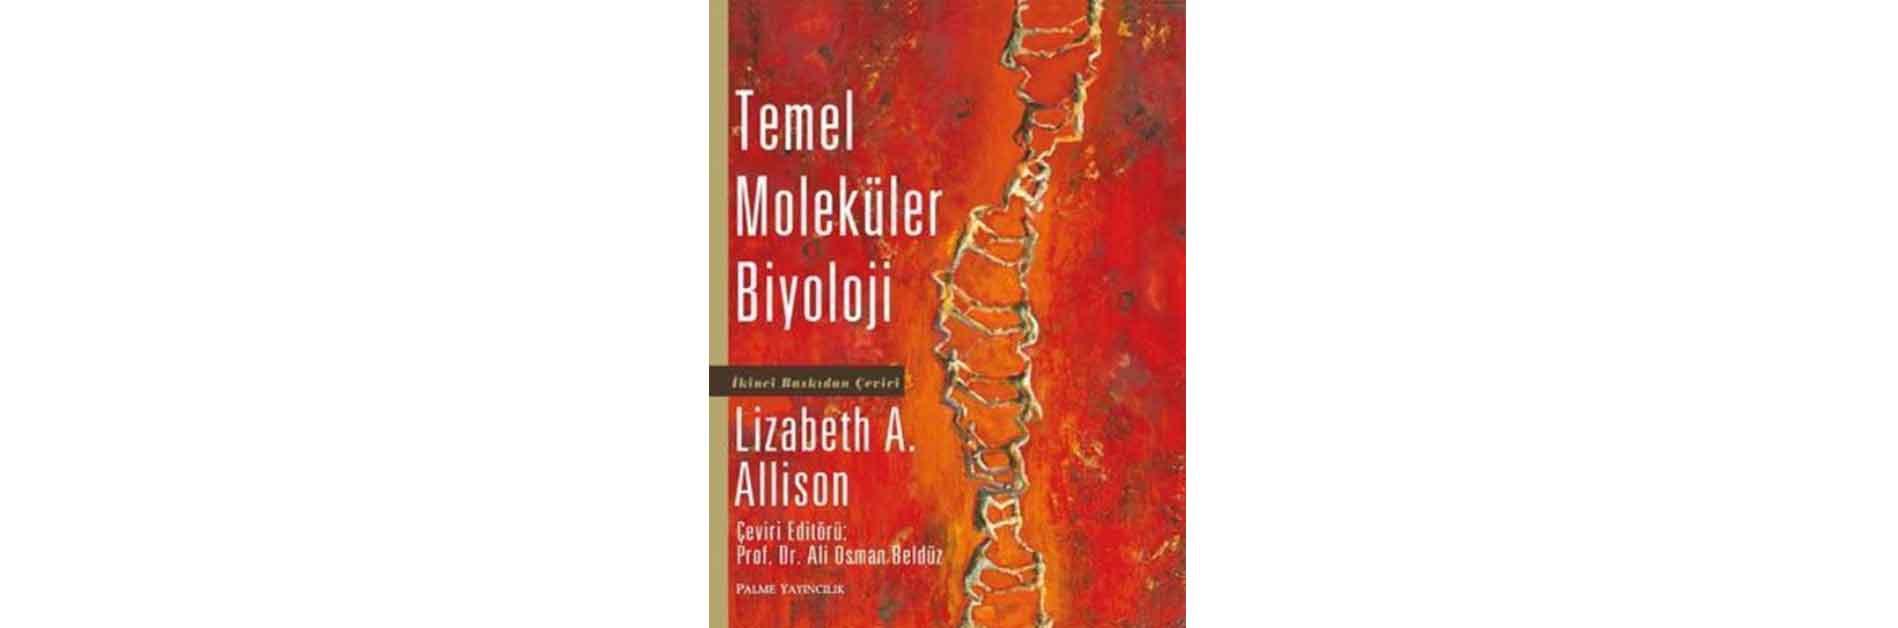 Prof.Dr. Ali Osman BELDÜZün editörlüğünü yapmış olduğu 'Temel Moleküler Biyoloji' kitabı